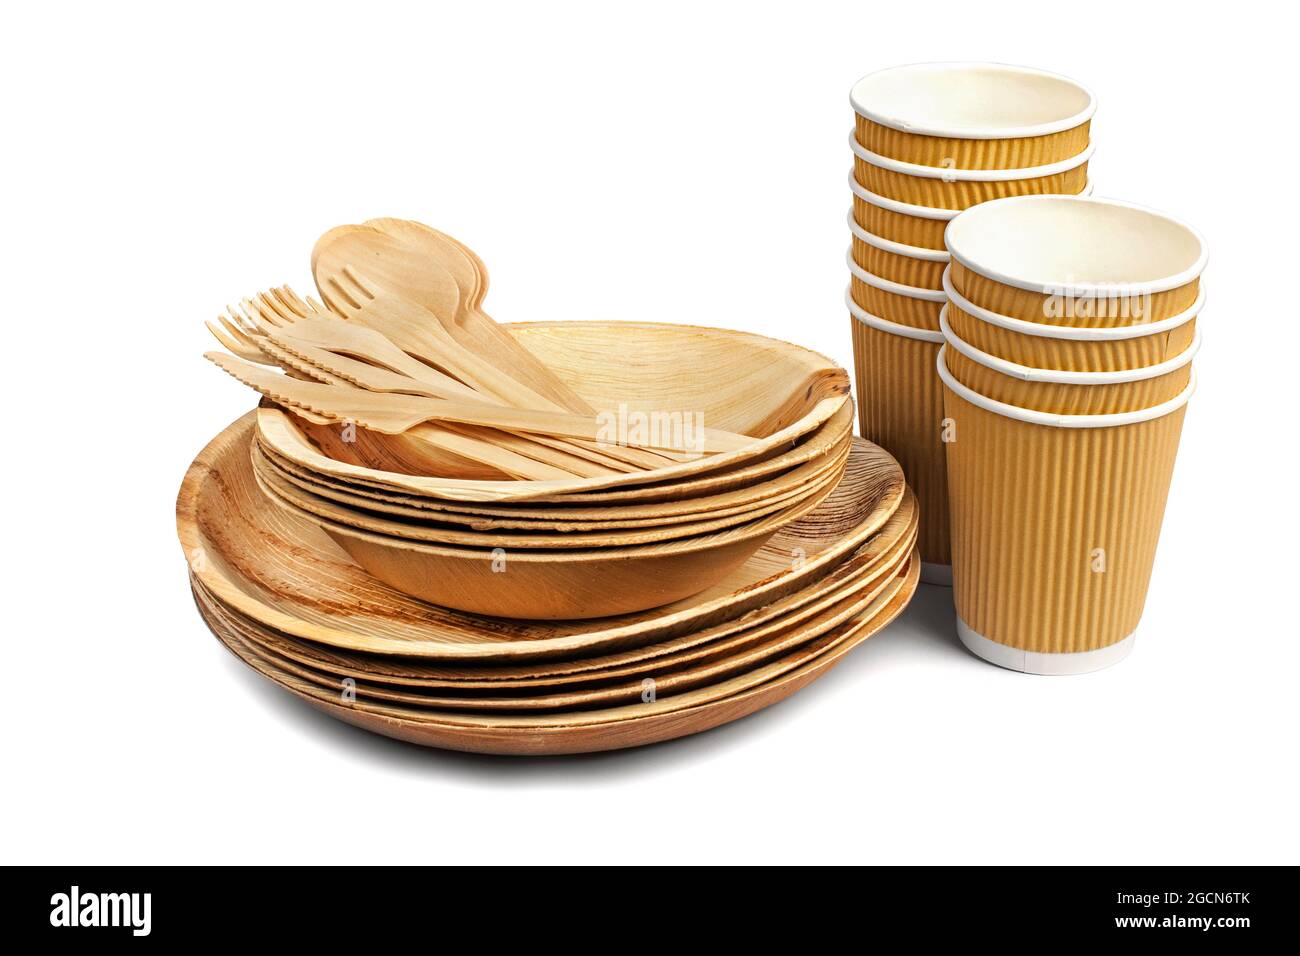 Eco friendly wooden tableware on white background Stock Photo